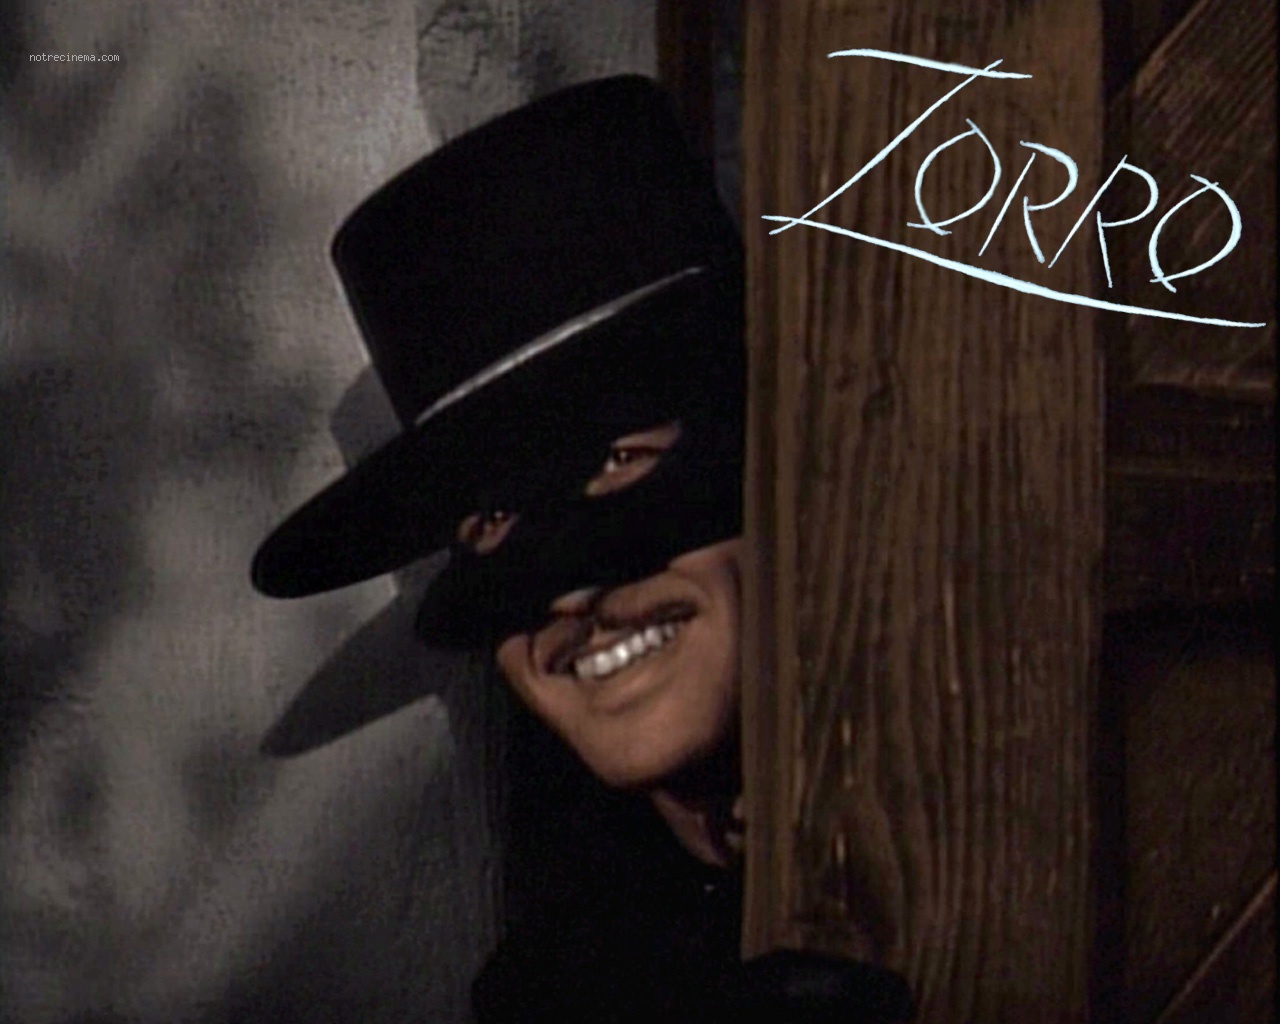 Zorro Wallpaper Jpg